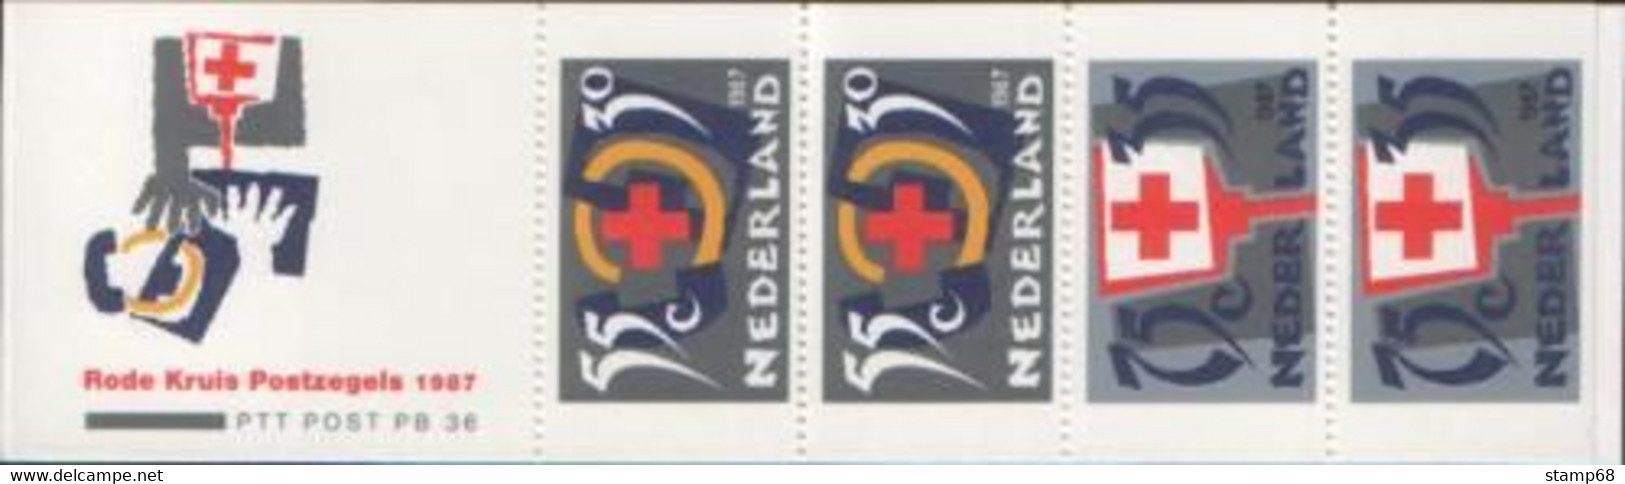 Nederland NVPH PB36 Rode Kruis 1987 MNH Postfris Red Cross - Carnets Et Roulettes